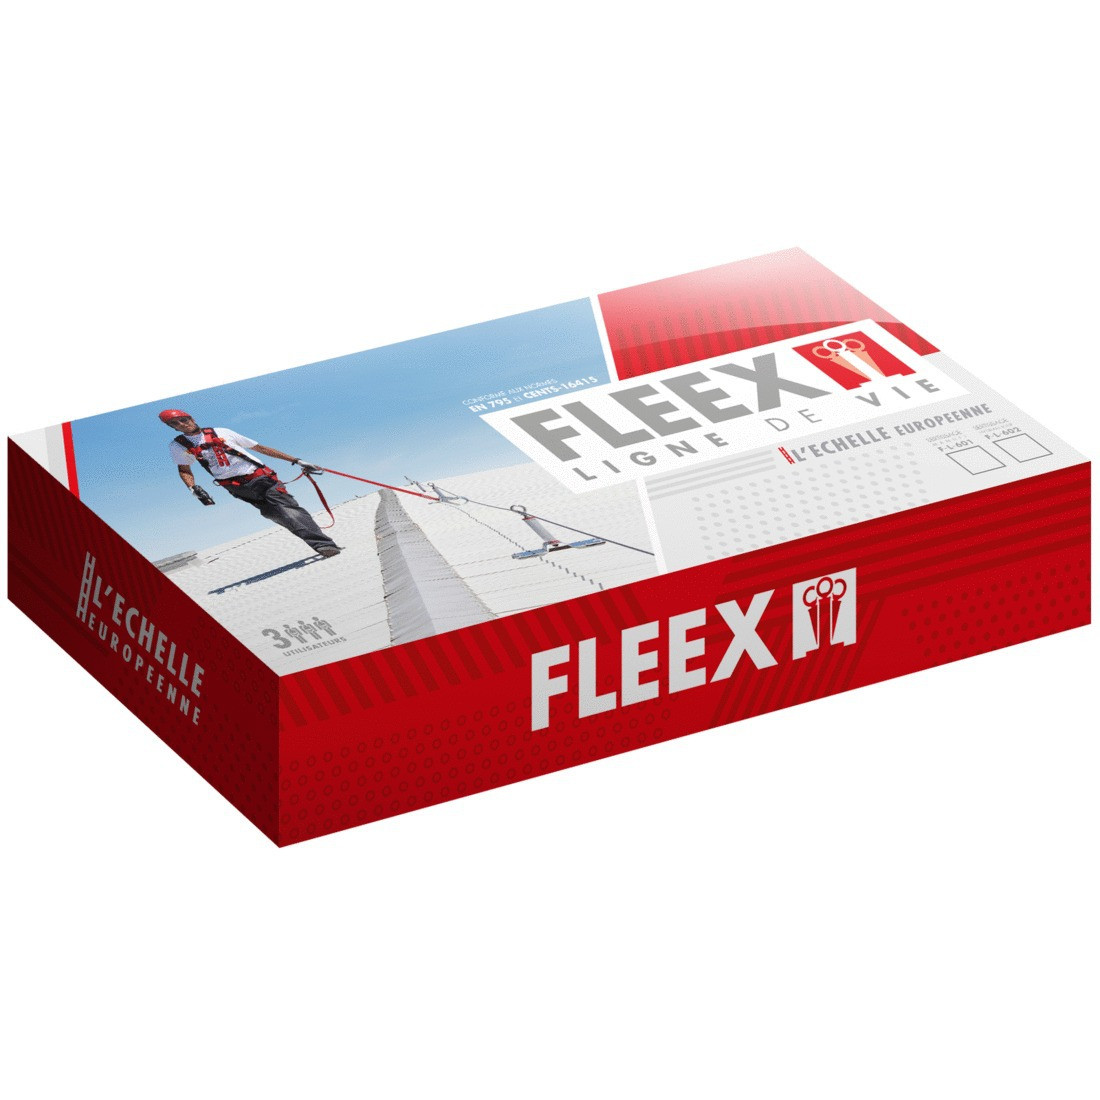 FLEEX lifeline box